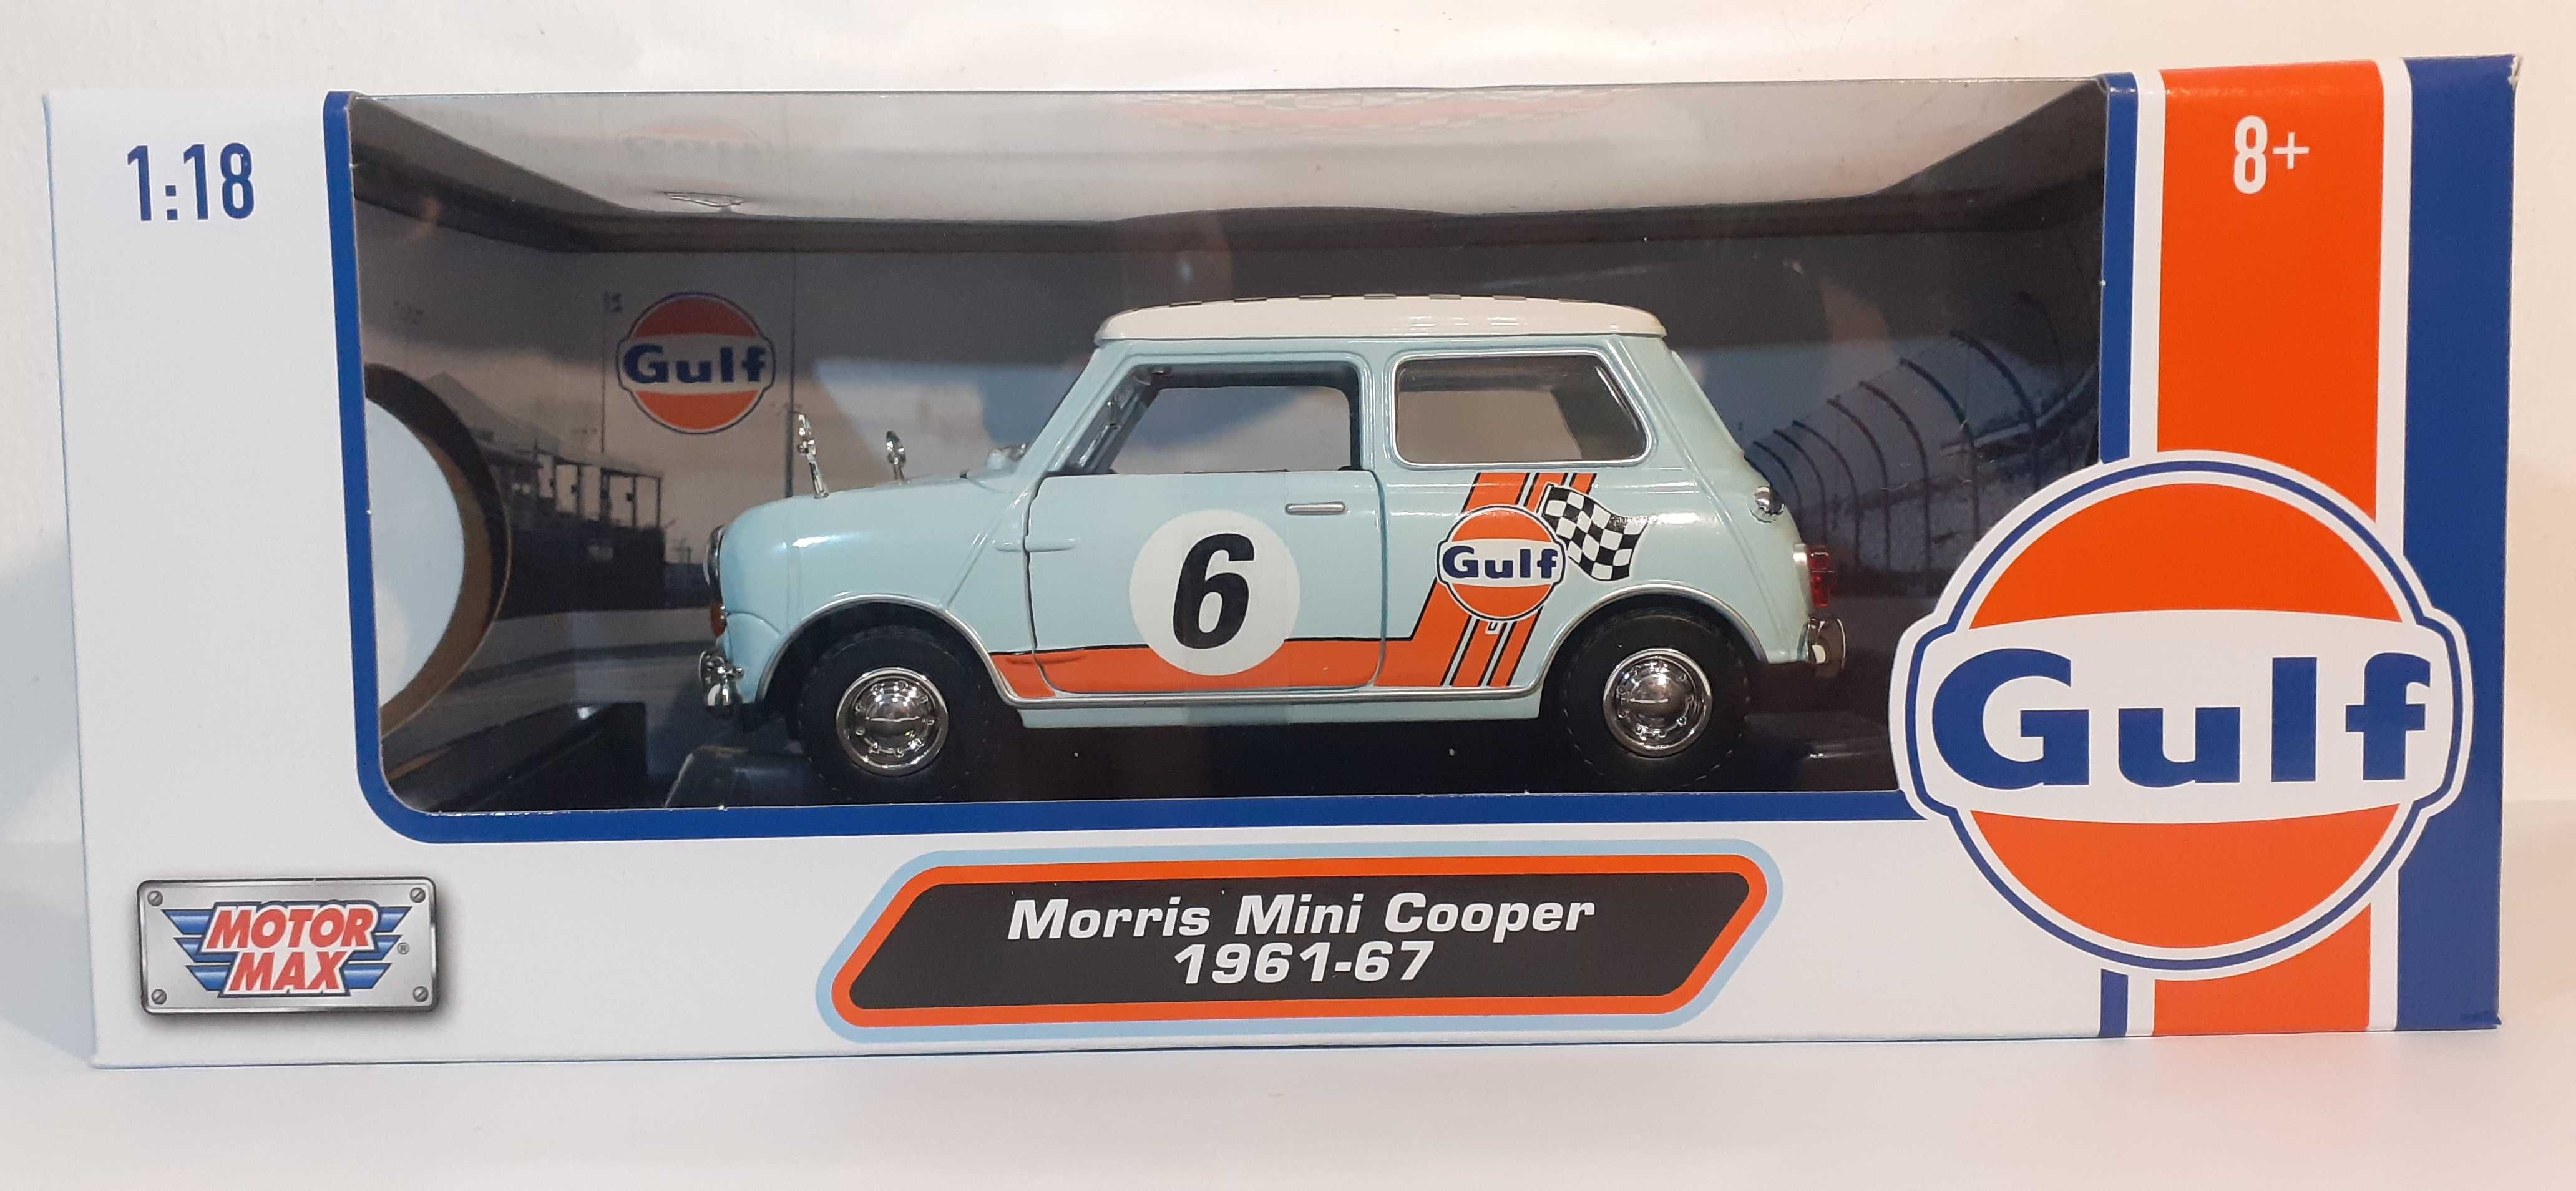 1/18 Mini Cooper Gulf - MotorMax